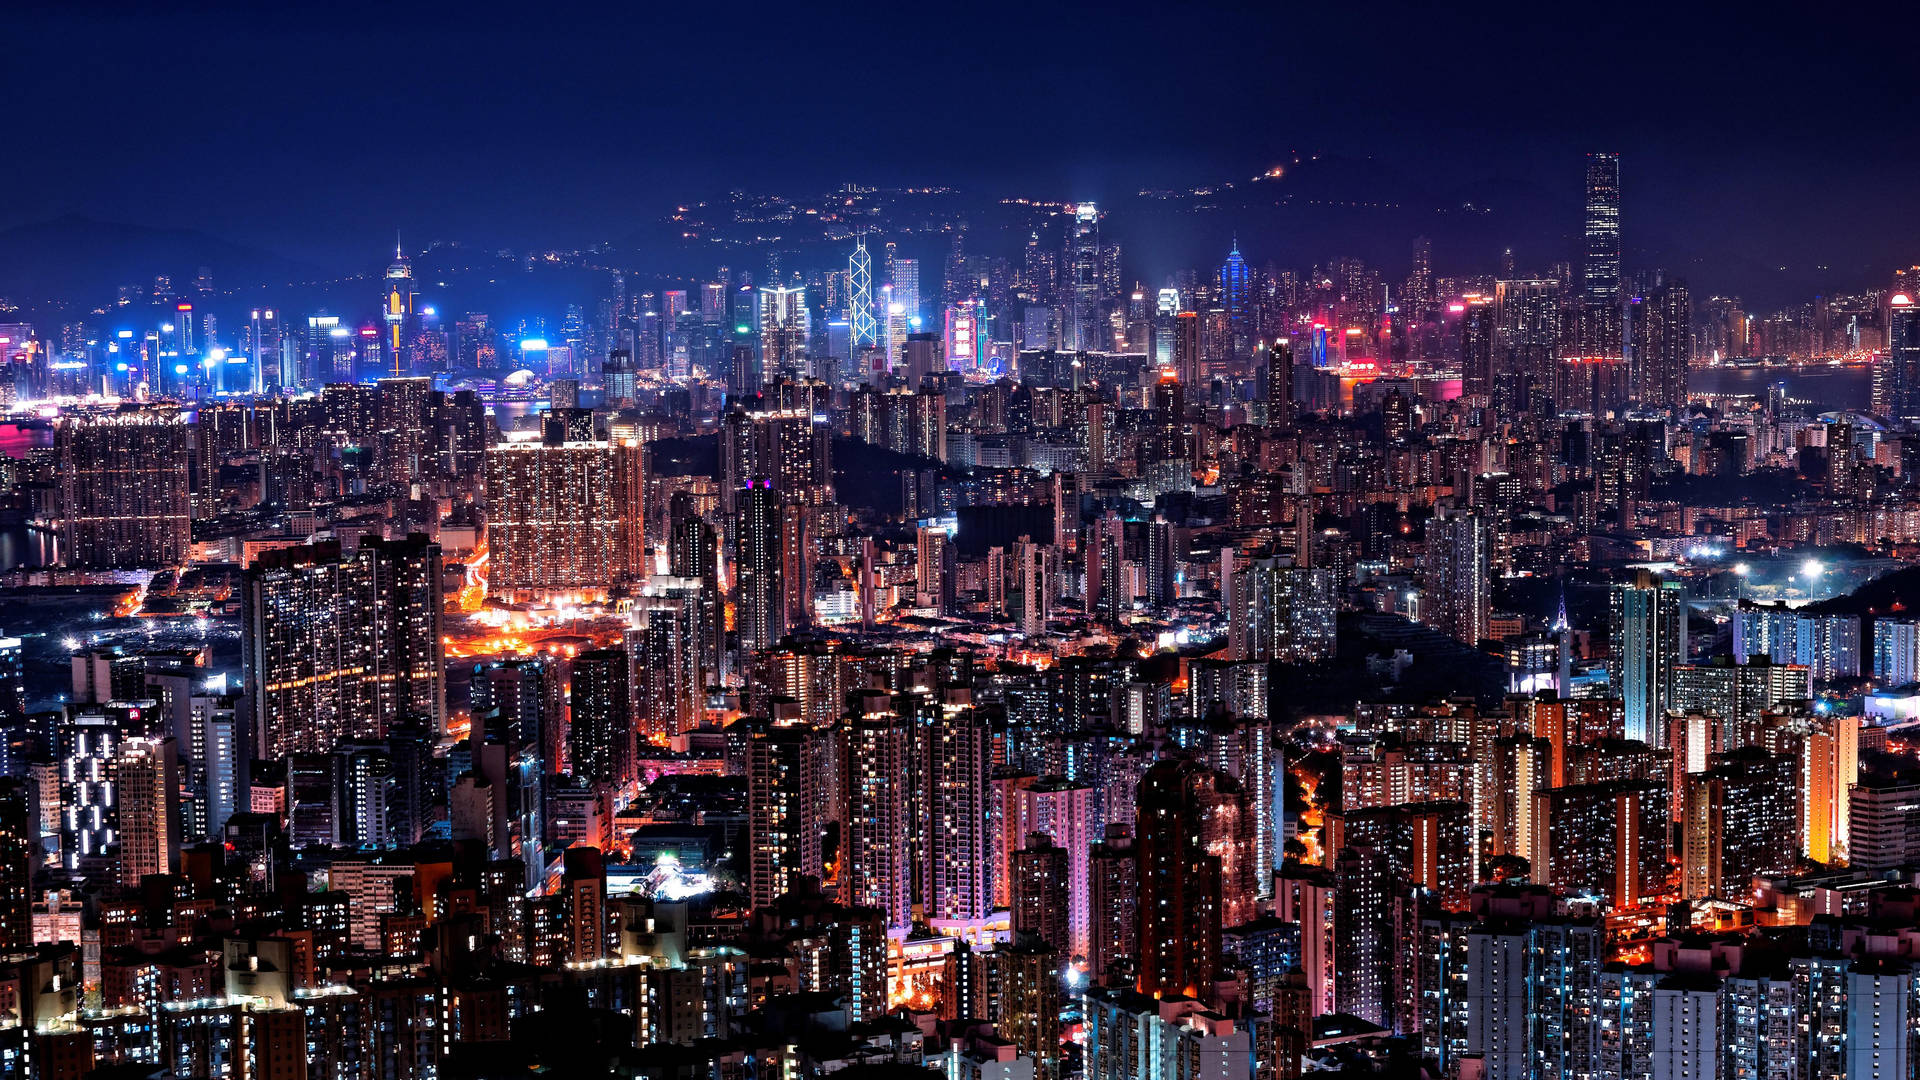 City Skyscrapers At Night iMac 4K Wallpaper